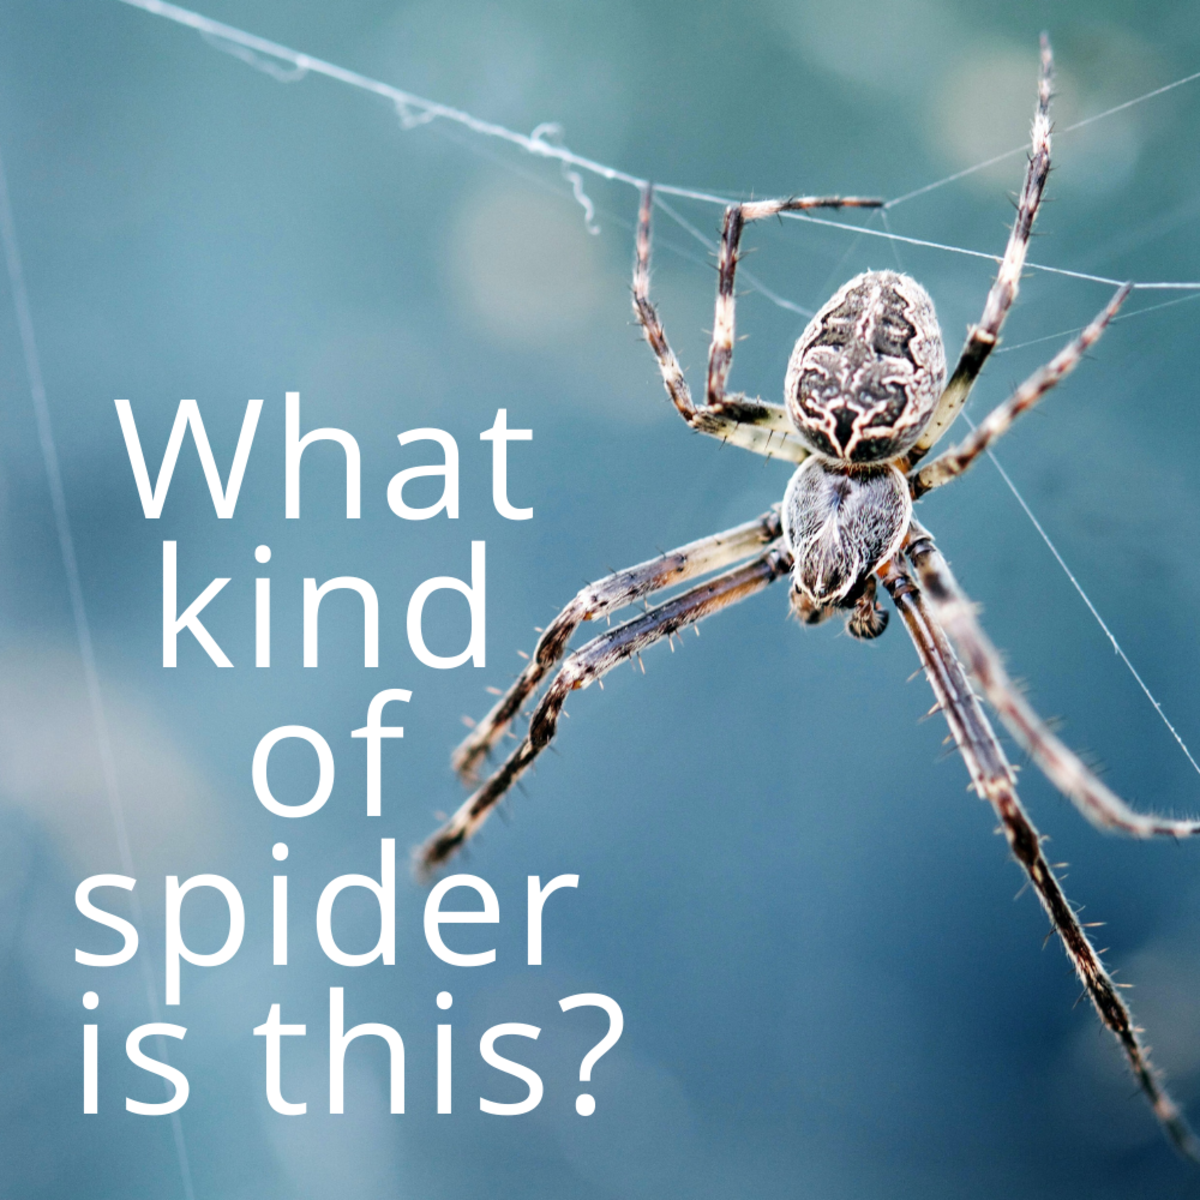 Spider Identification Guide